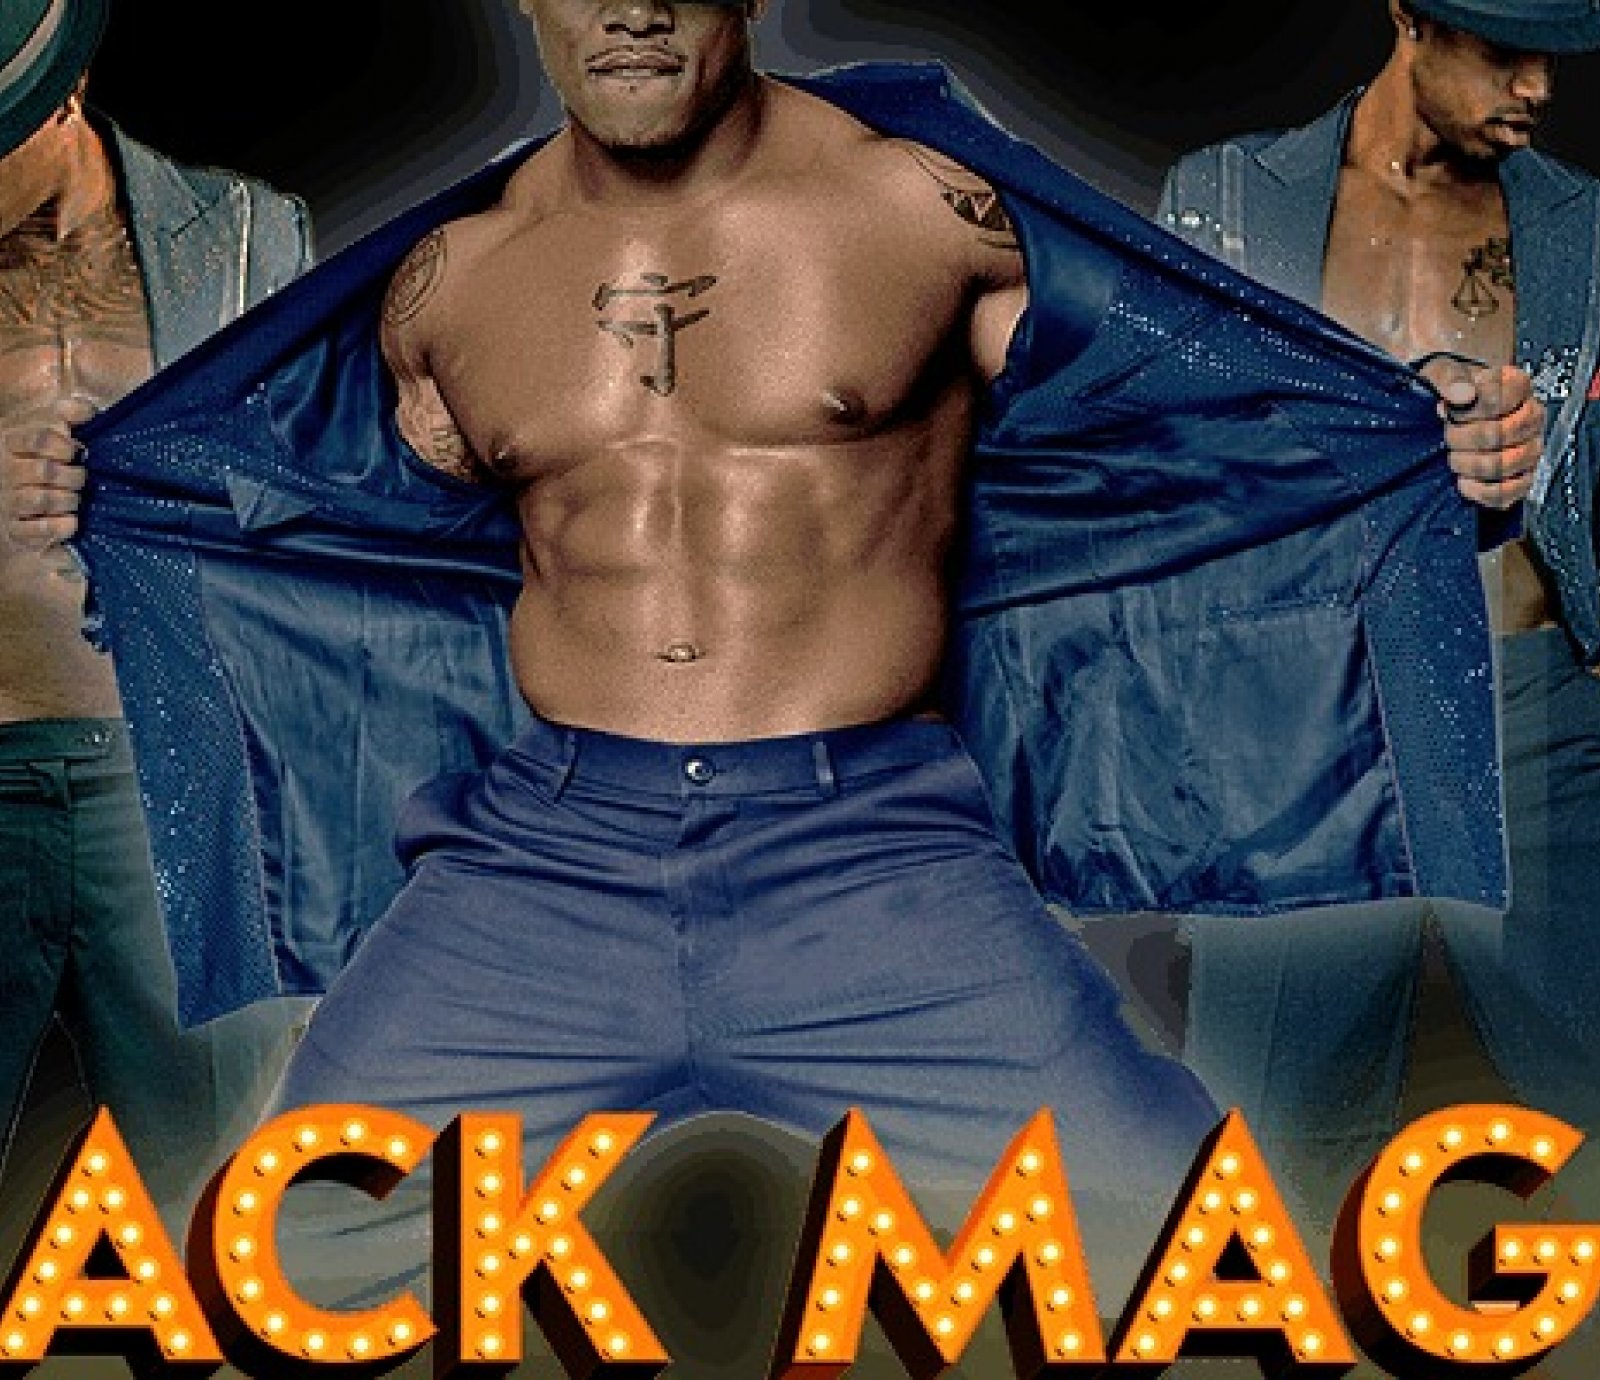 Black Magic Live A.K.A Vivica's Black Magic (LAS VEGAS)